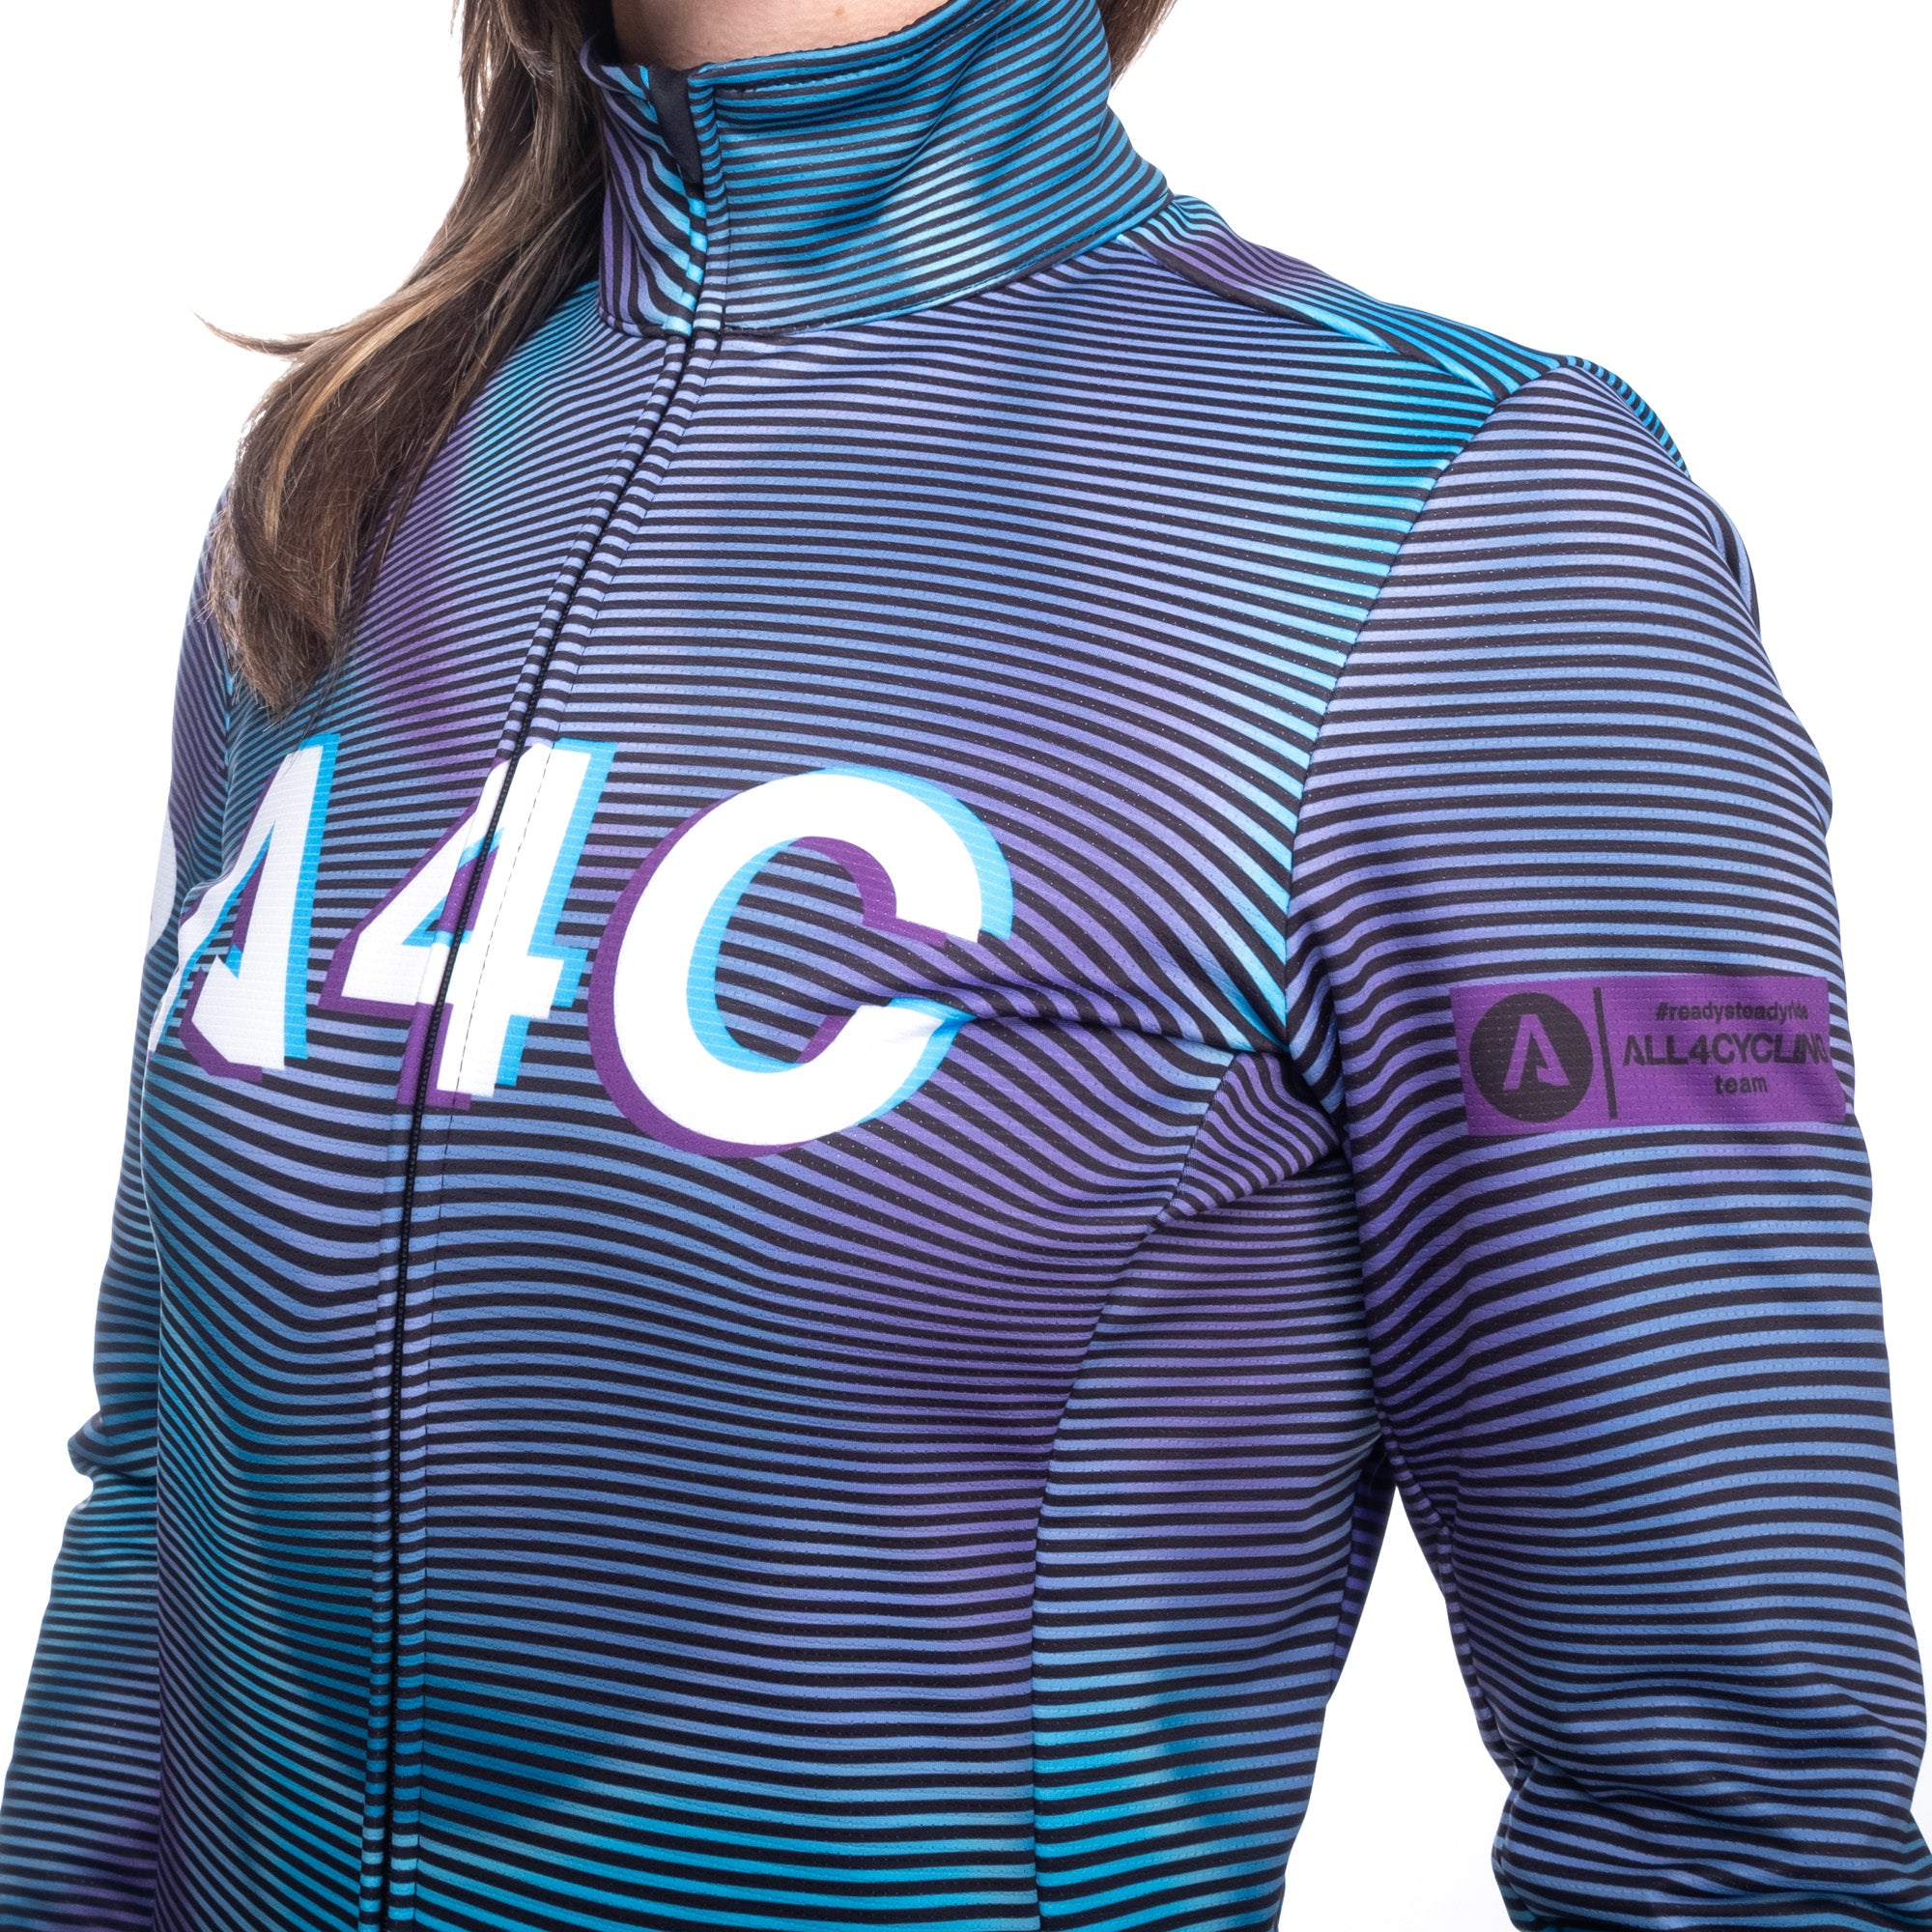 All4cycling Team Winter women jacket